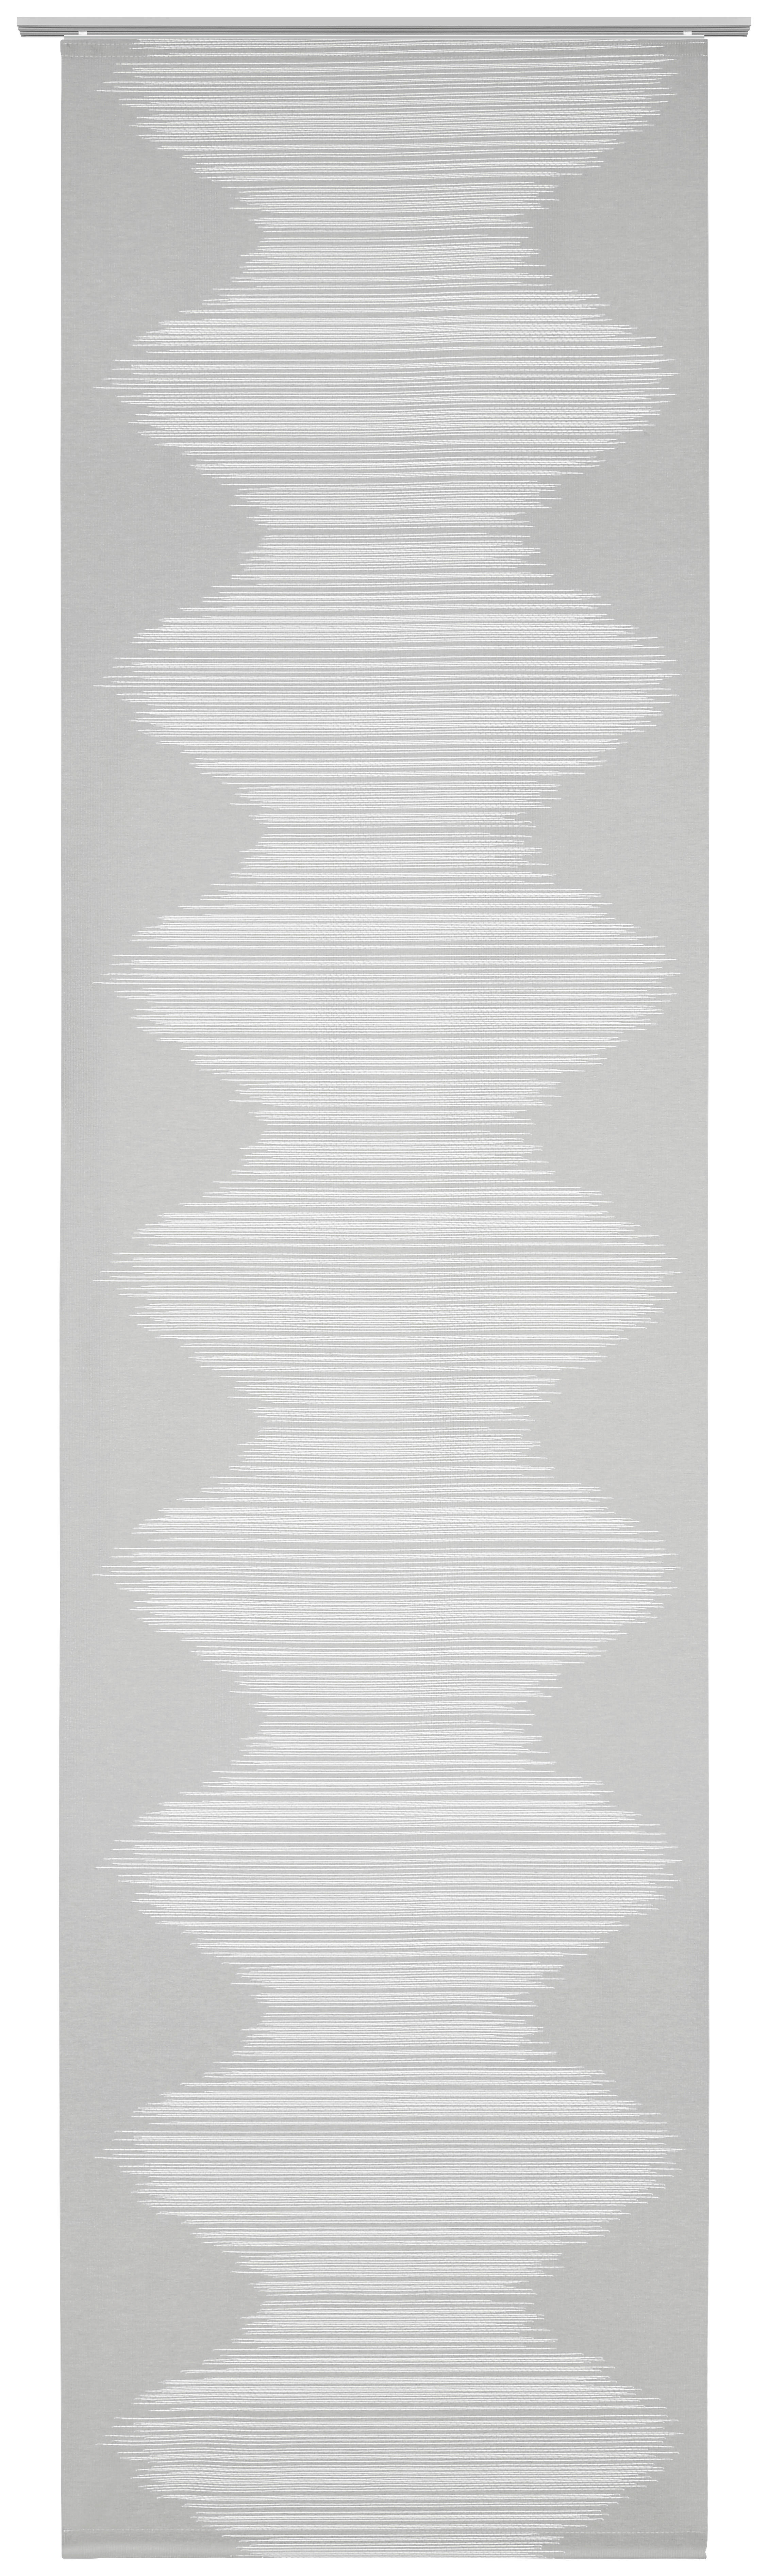 FLÄCHENVORHANG    60/245 cm   - Anthrazit/Weiß, MODERN, Textil (60/245cm) - Novel